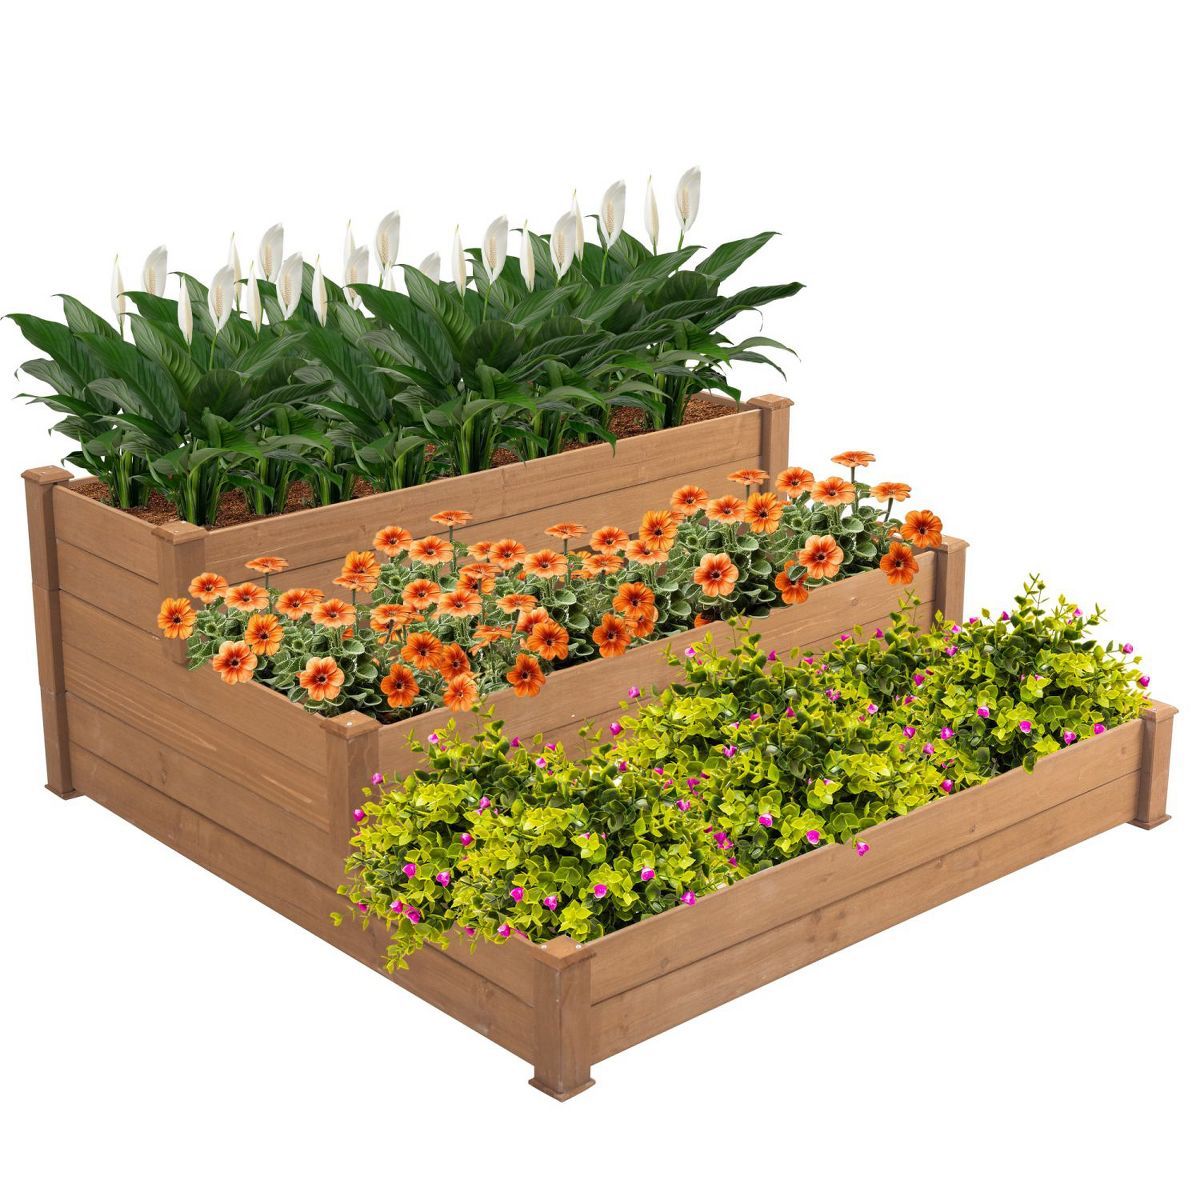 3-tier Wooden Outdoor Natural Garden Bed, Raised Patio Flower Box - The Pop Home | Target